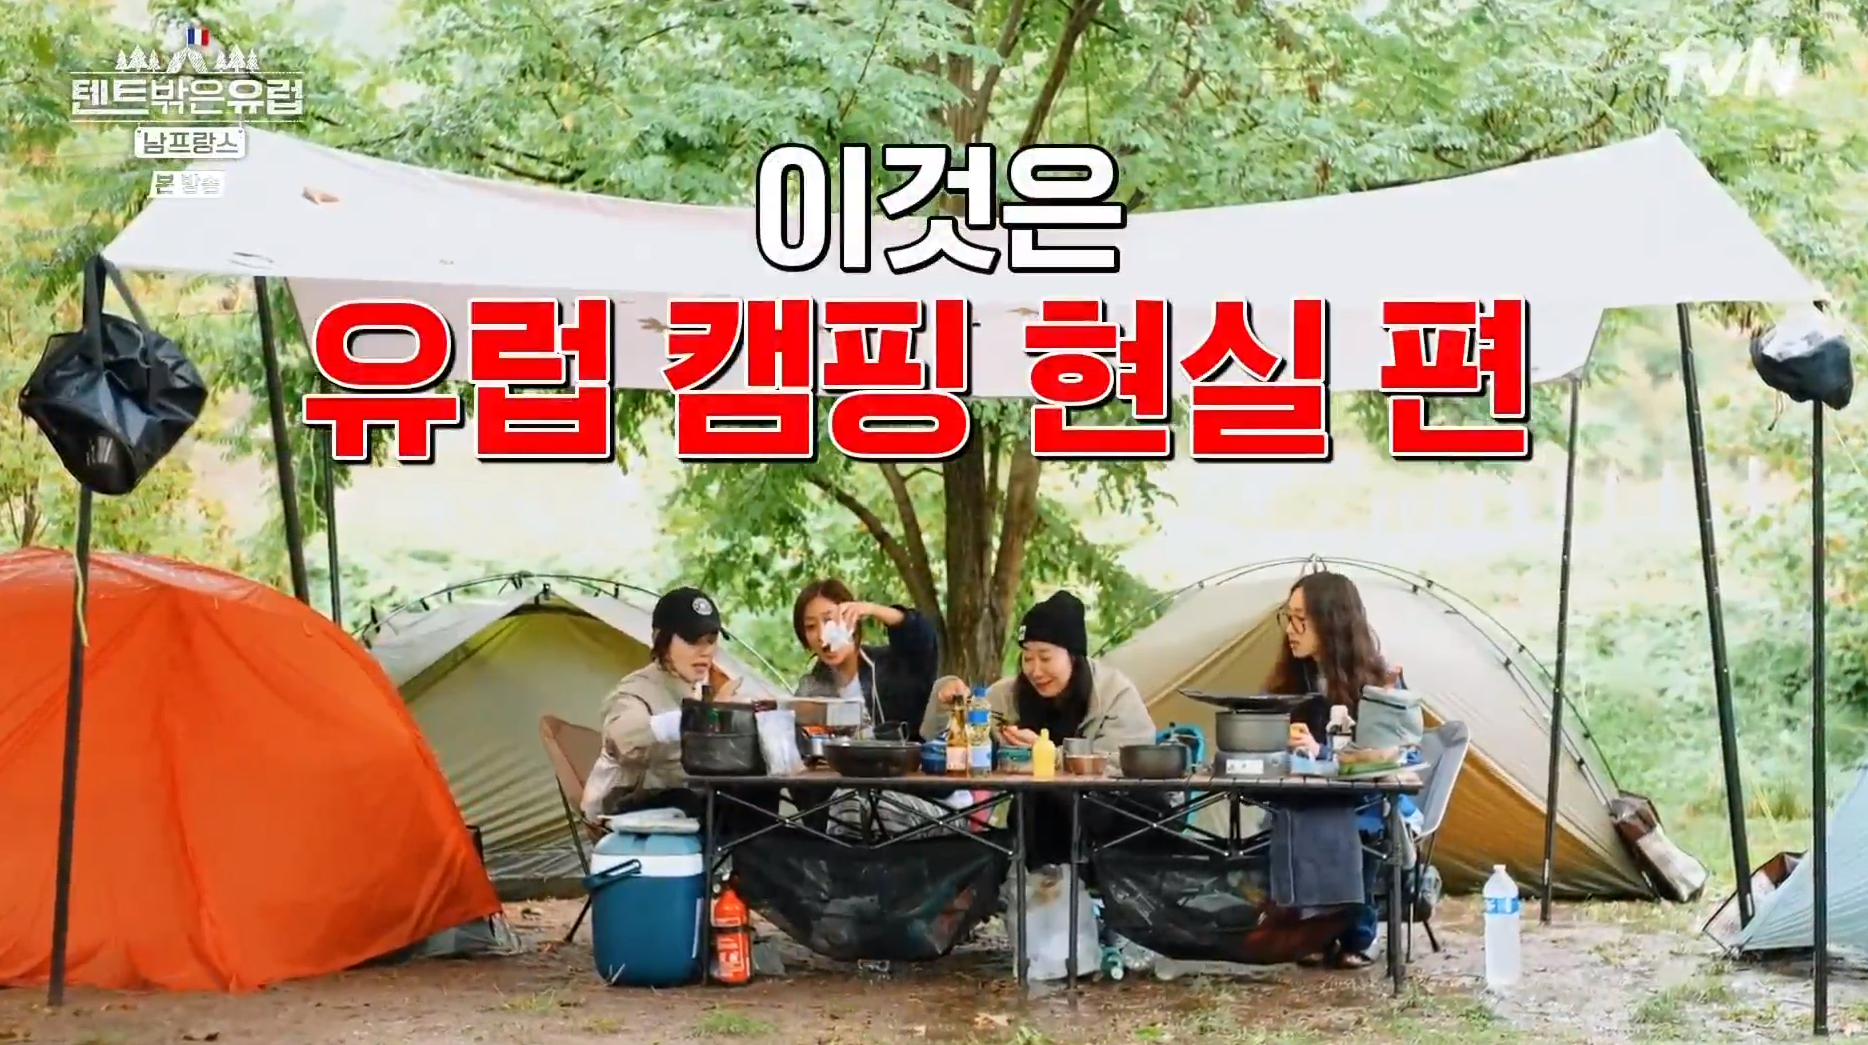 tvN &#39;텐트 밖은 유럽 - 남프랑스 편&#39; 1회&#44; 유럽 캠핑 현실 장면